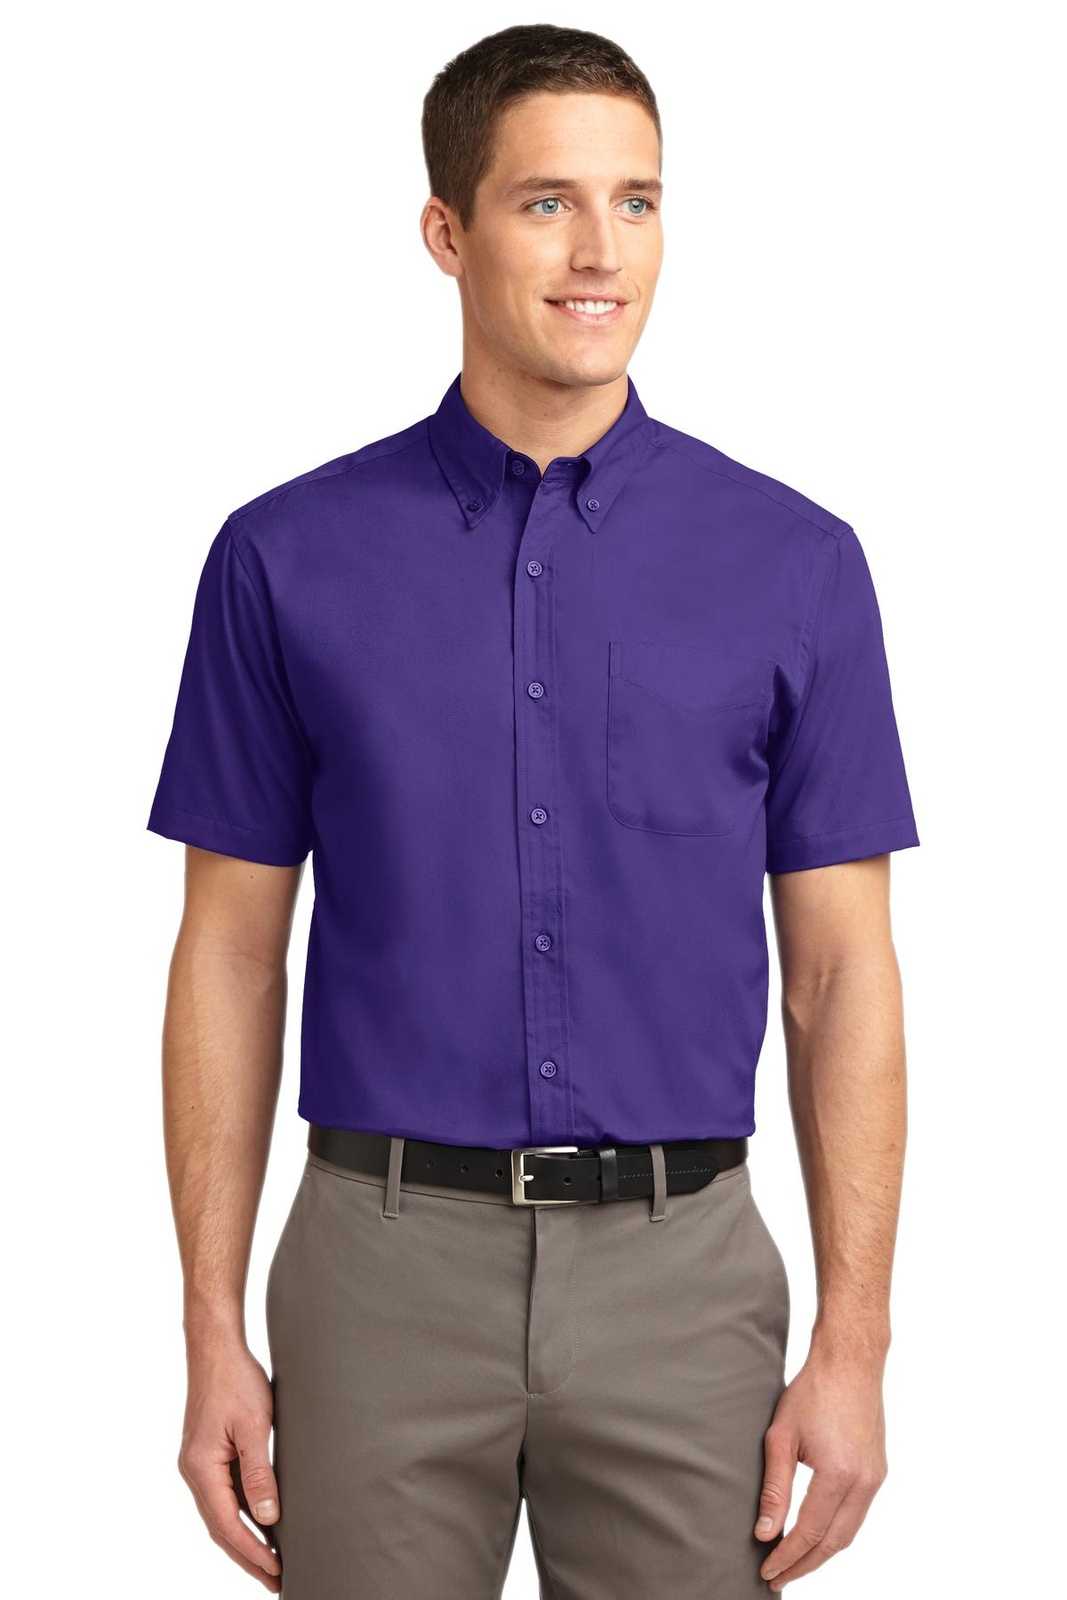 Port Authority S508 Short Sleeve Easy Care Shirt - Purple Light Stone - HIT a Double - 1